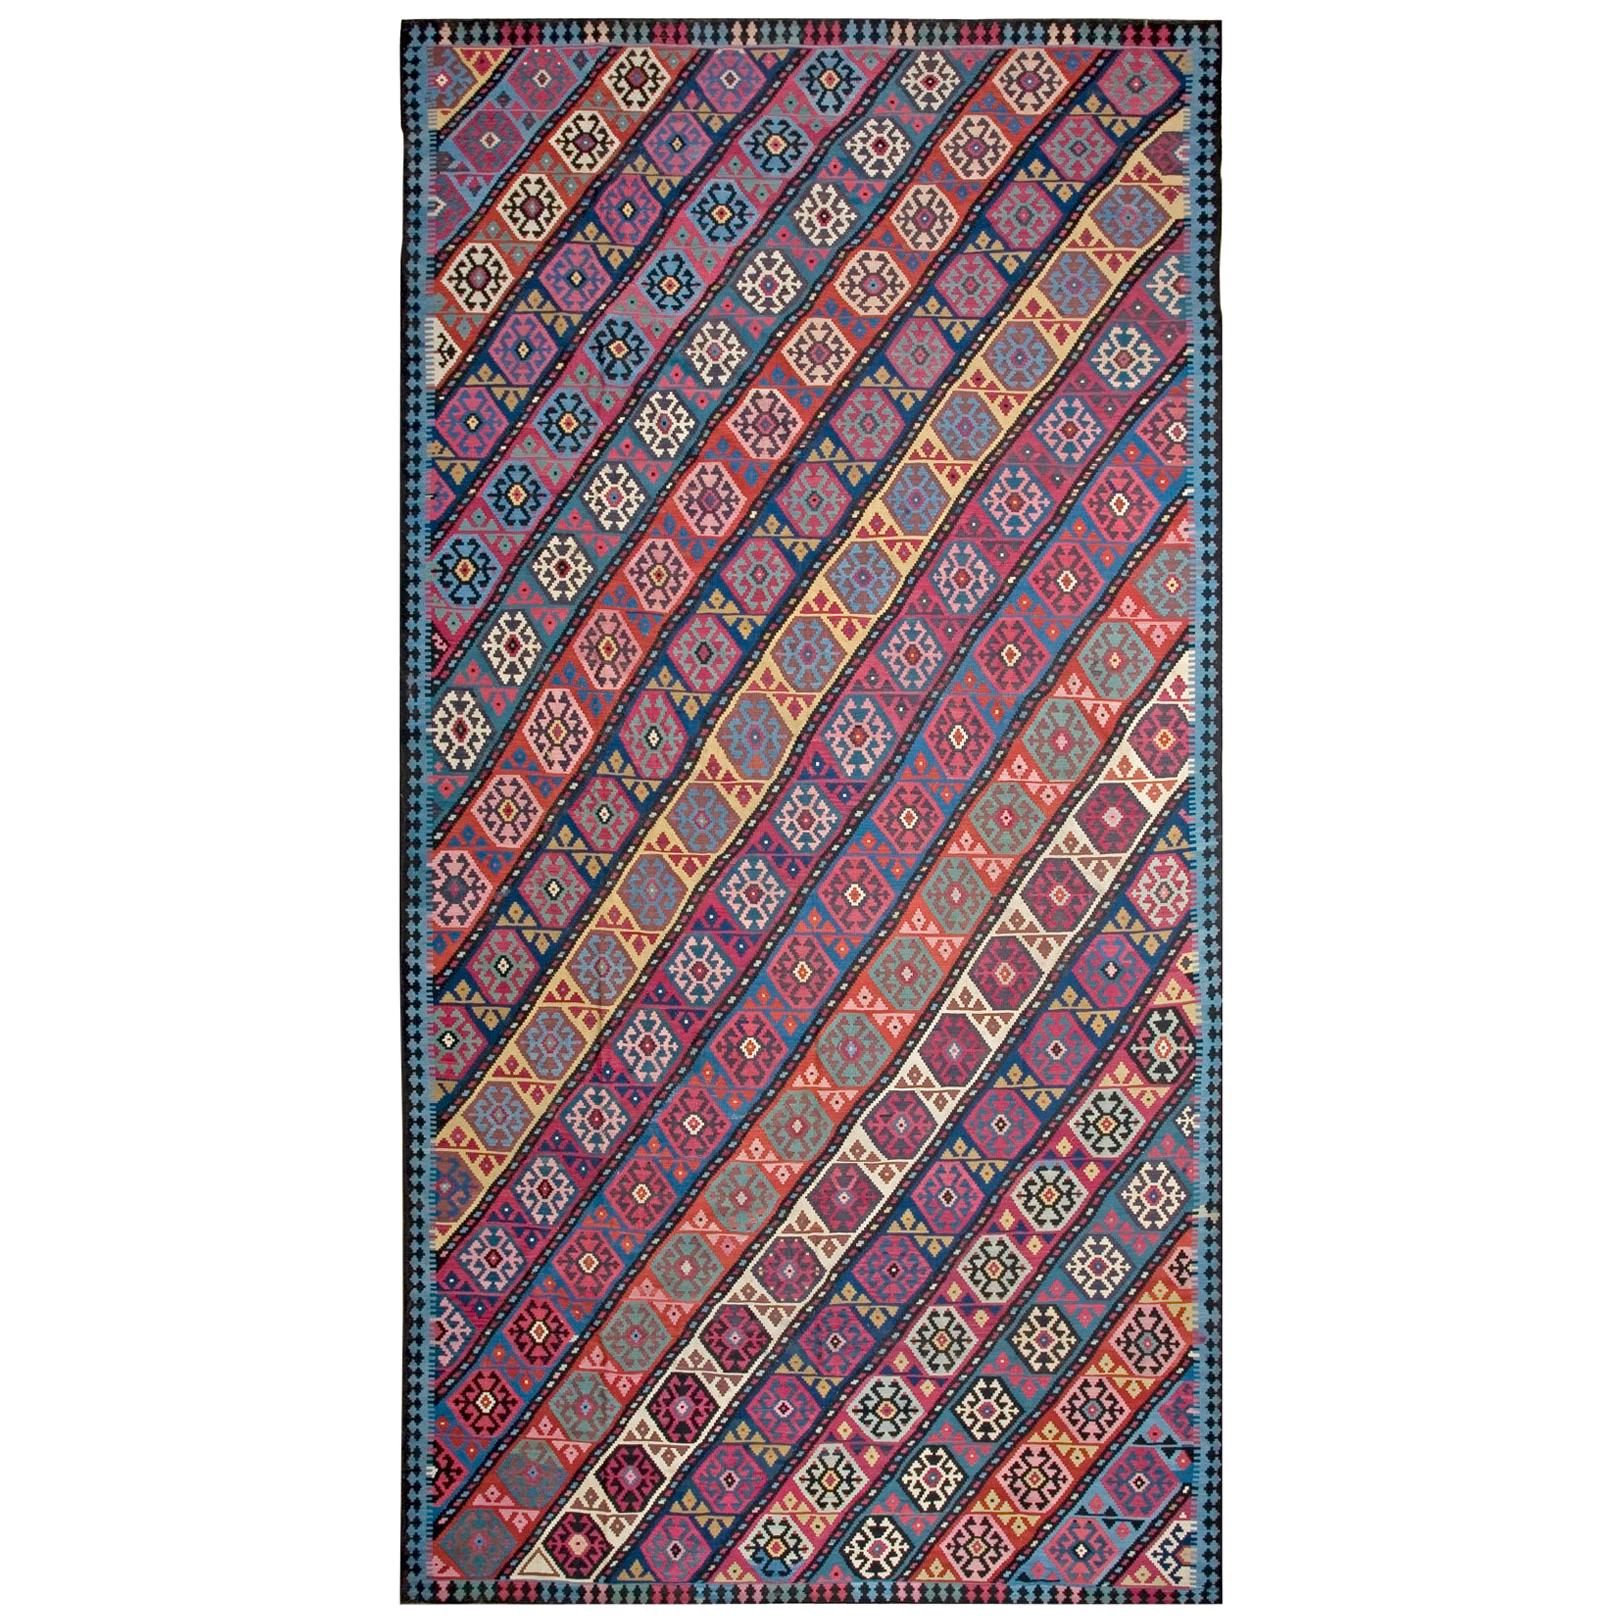 19th Century Over-Size Caucasian Flat-Weave ( 9' x 18' - 274 x 548 cm )